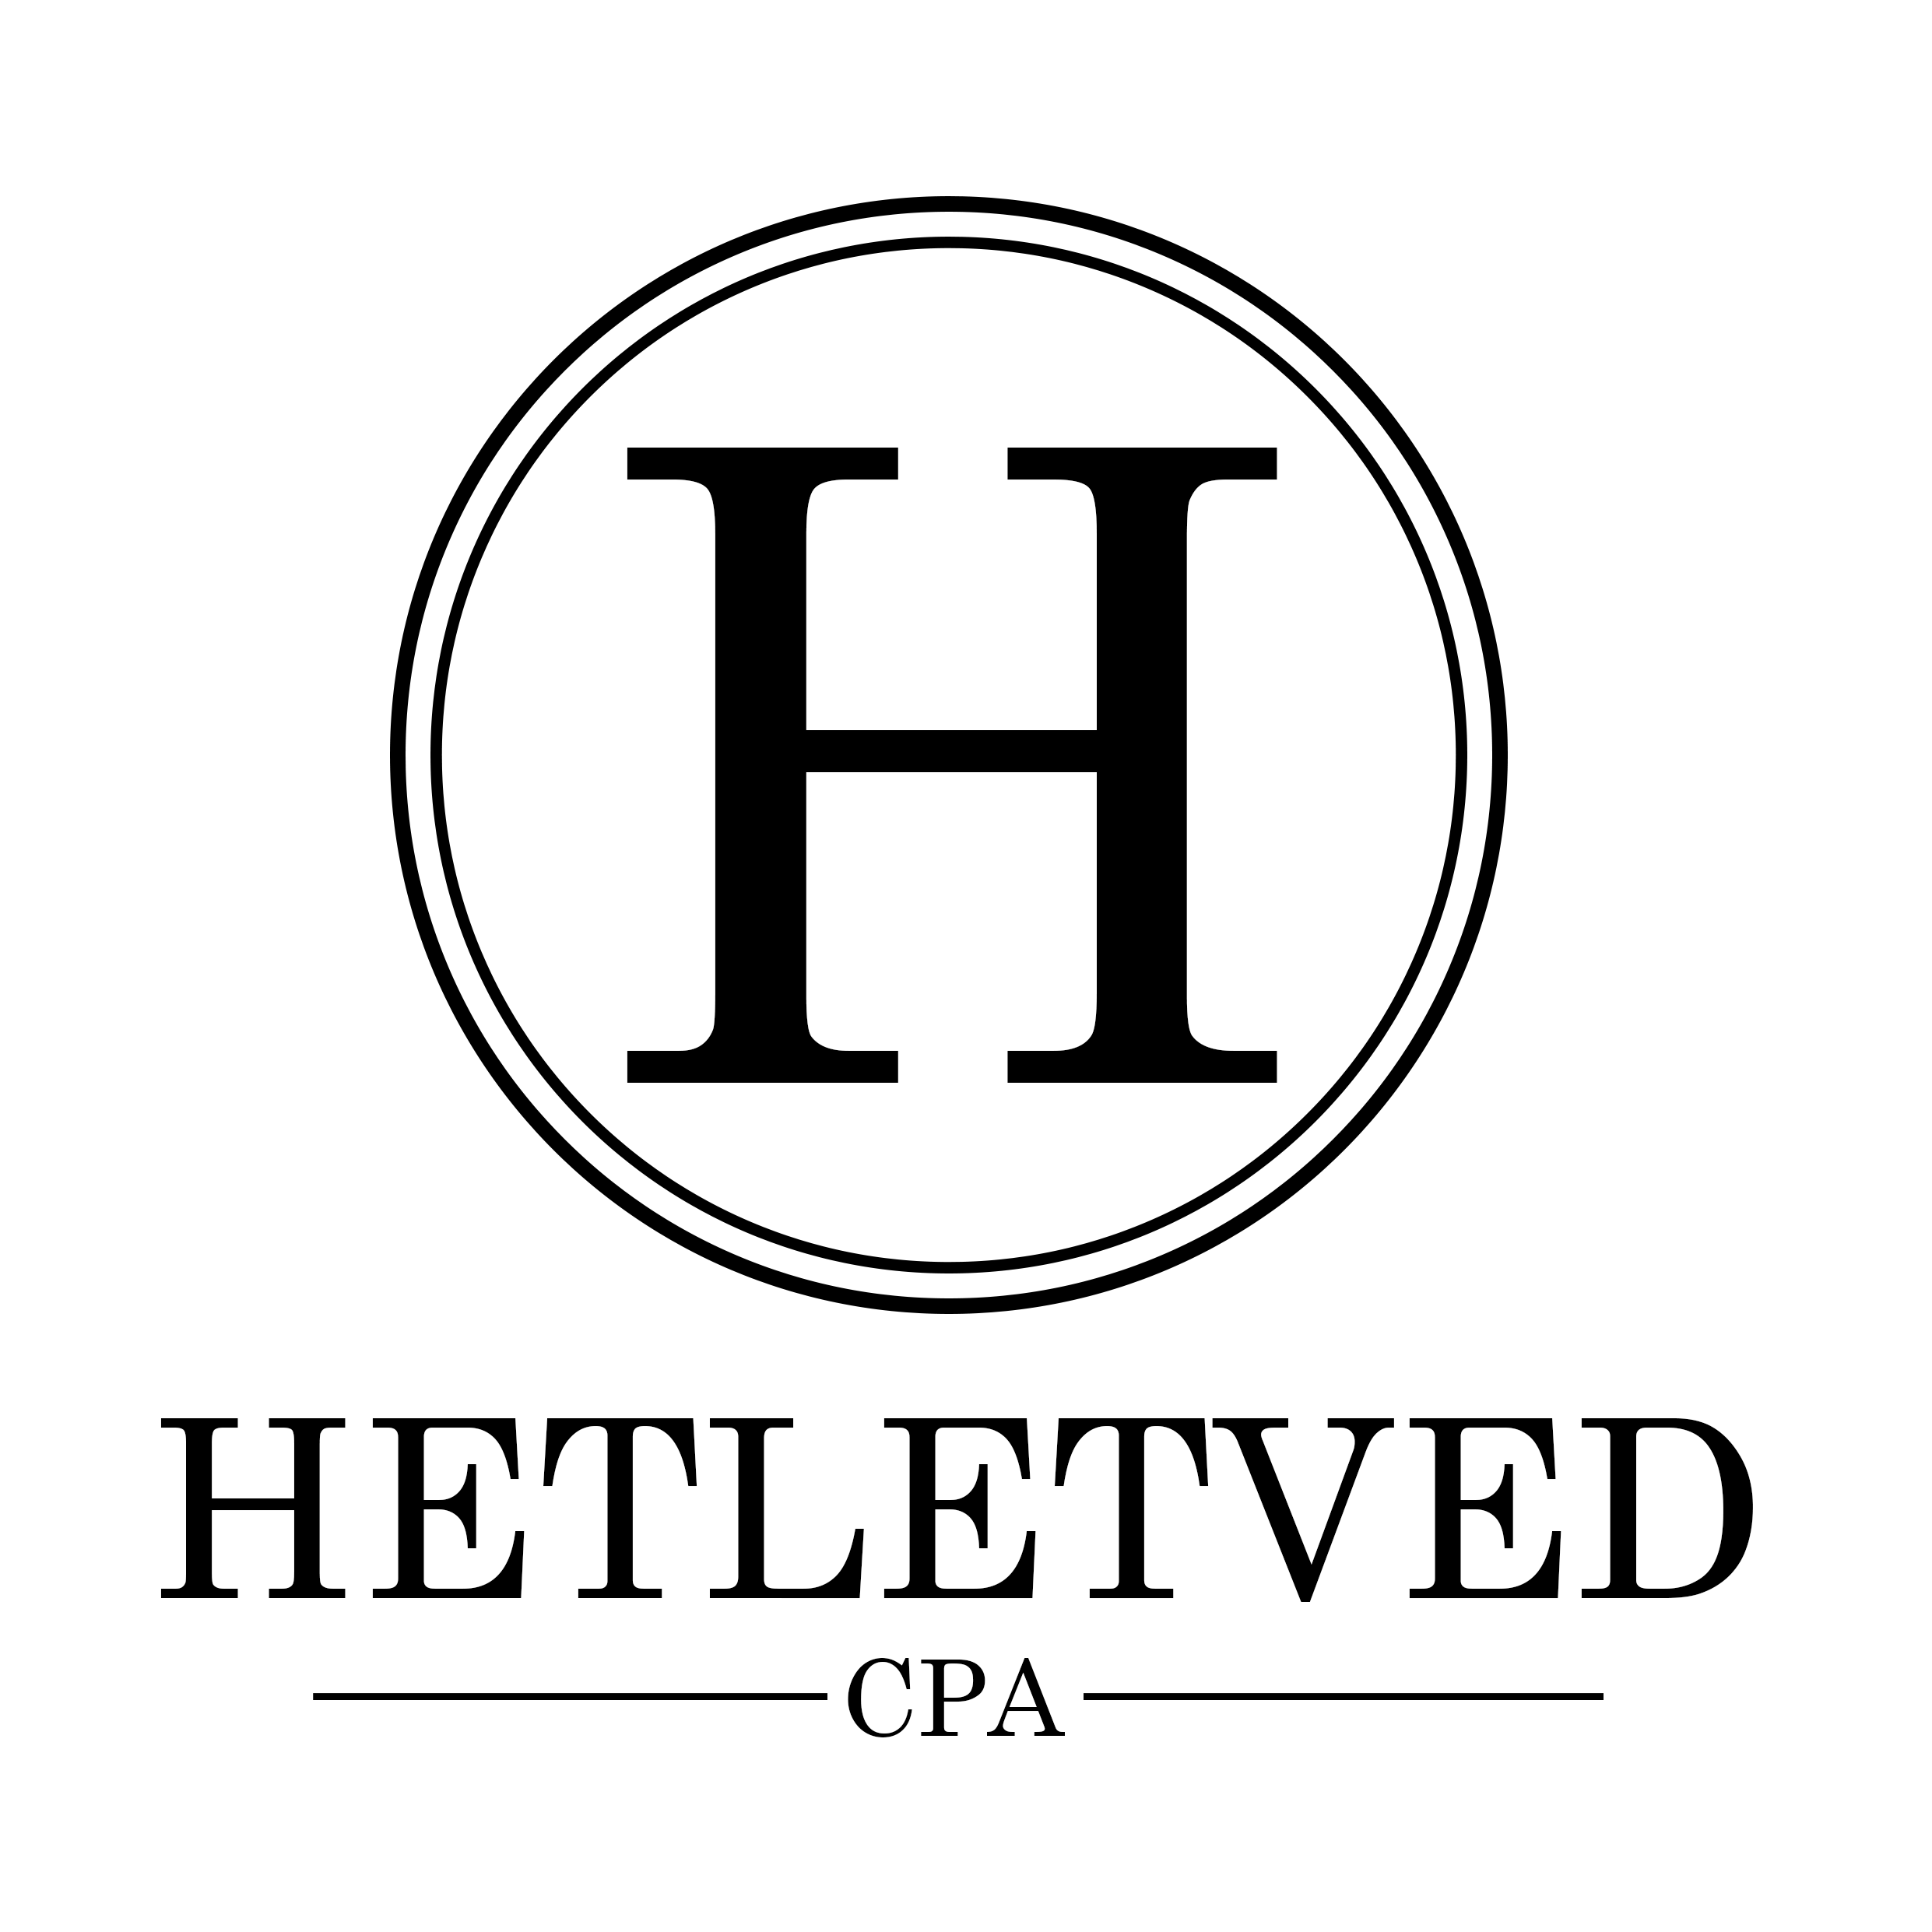 Hetletved CPA logo